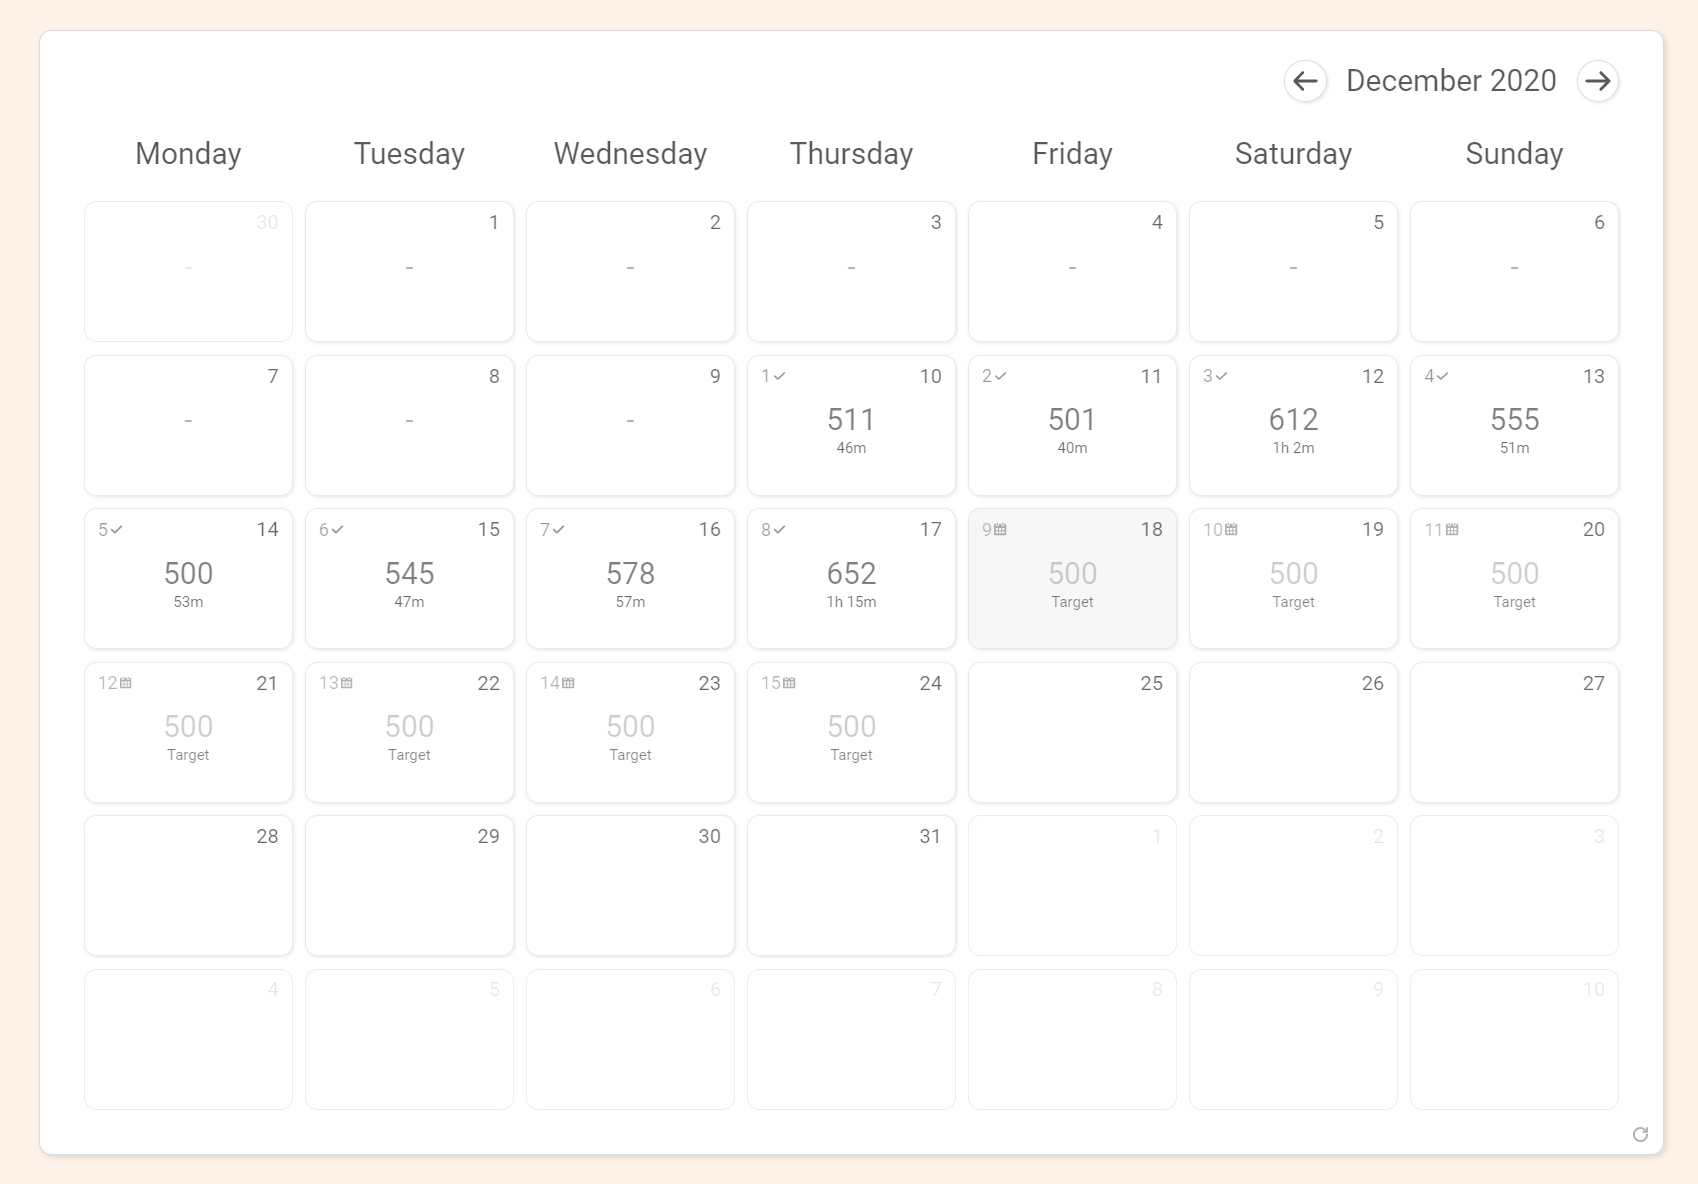 Inbuilt calendar to track your progress against daily targets.